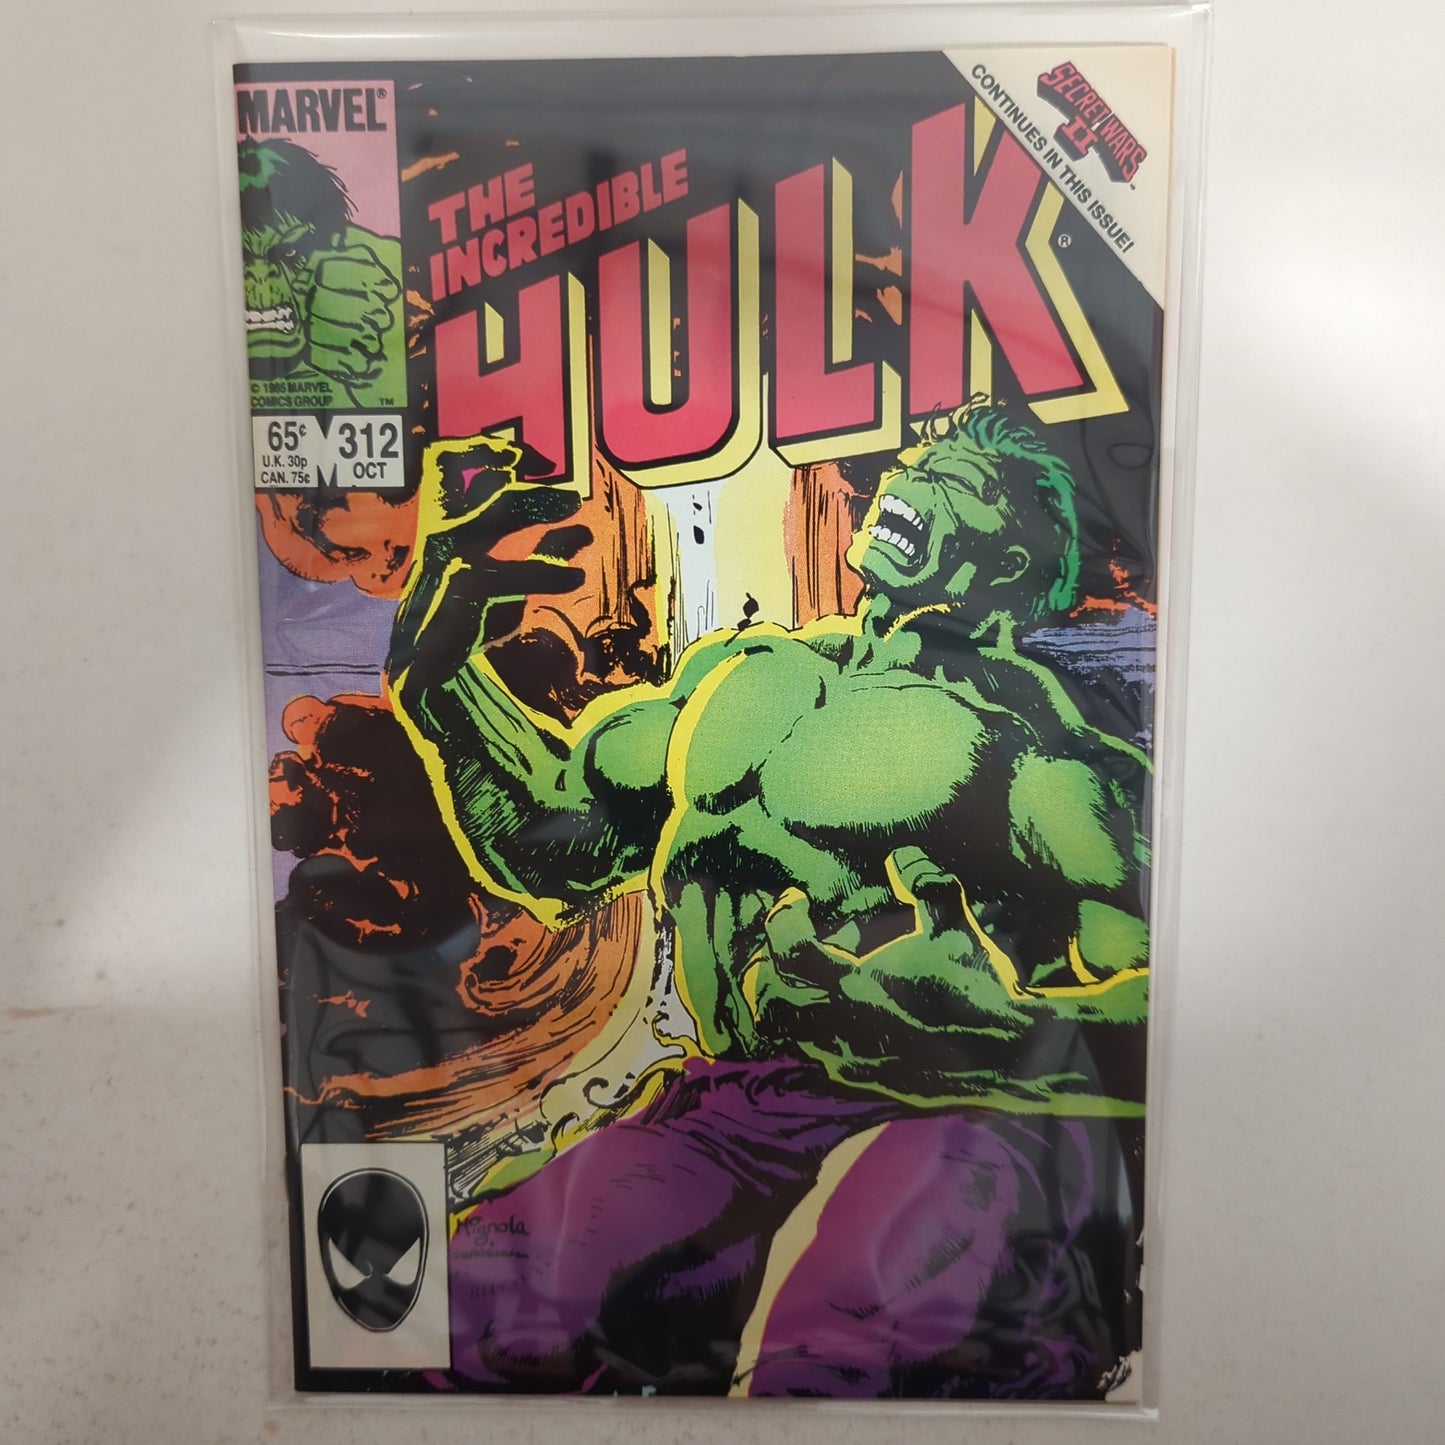 The Incredible Hulk #312